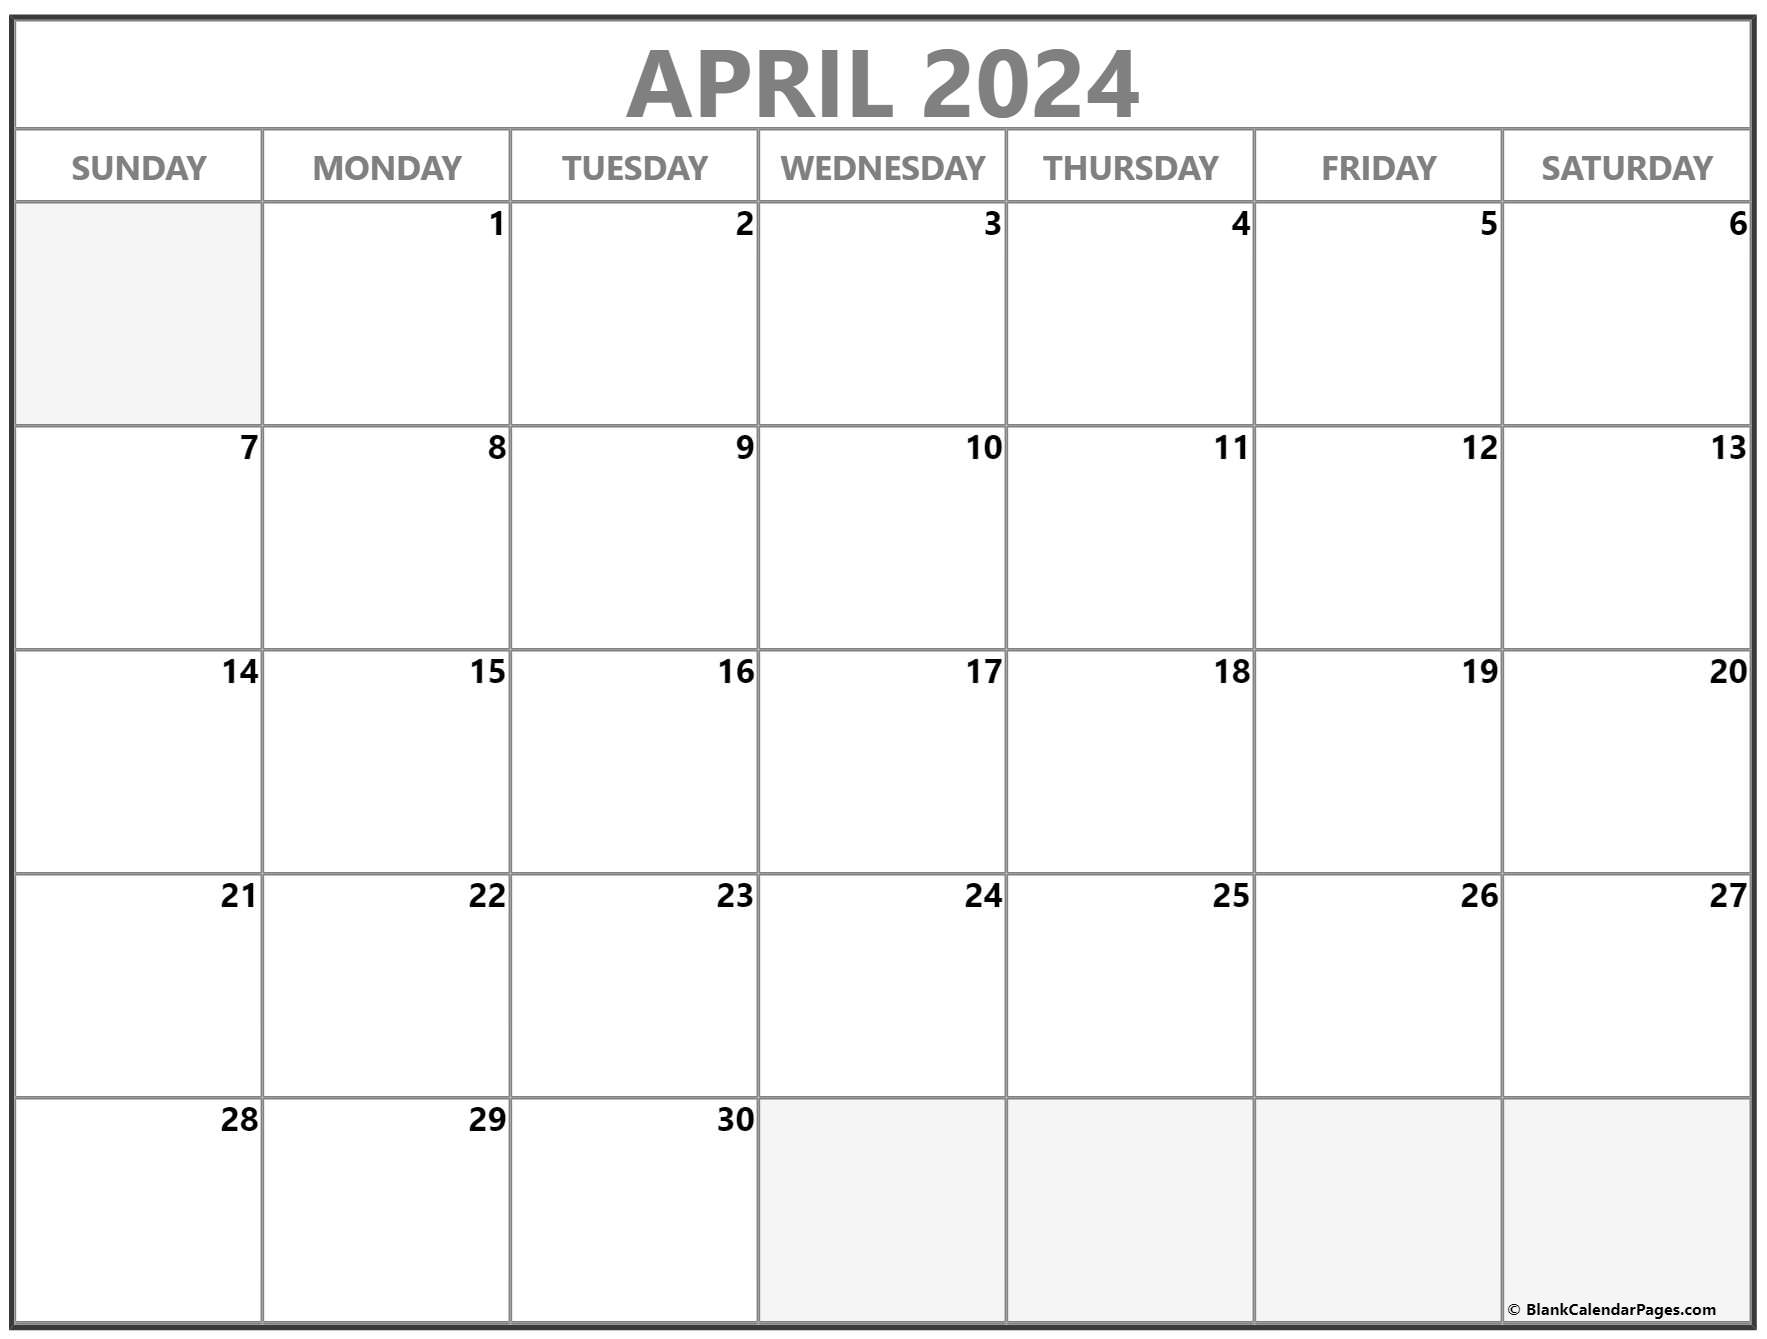 April 2024 Calendar Free Printable Calendar - Free Printable 2024 Monthly Calendar April